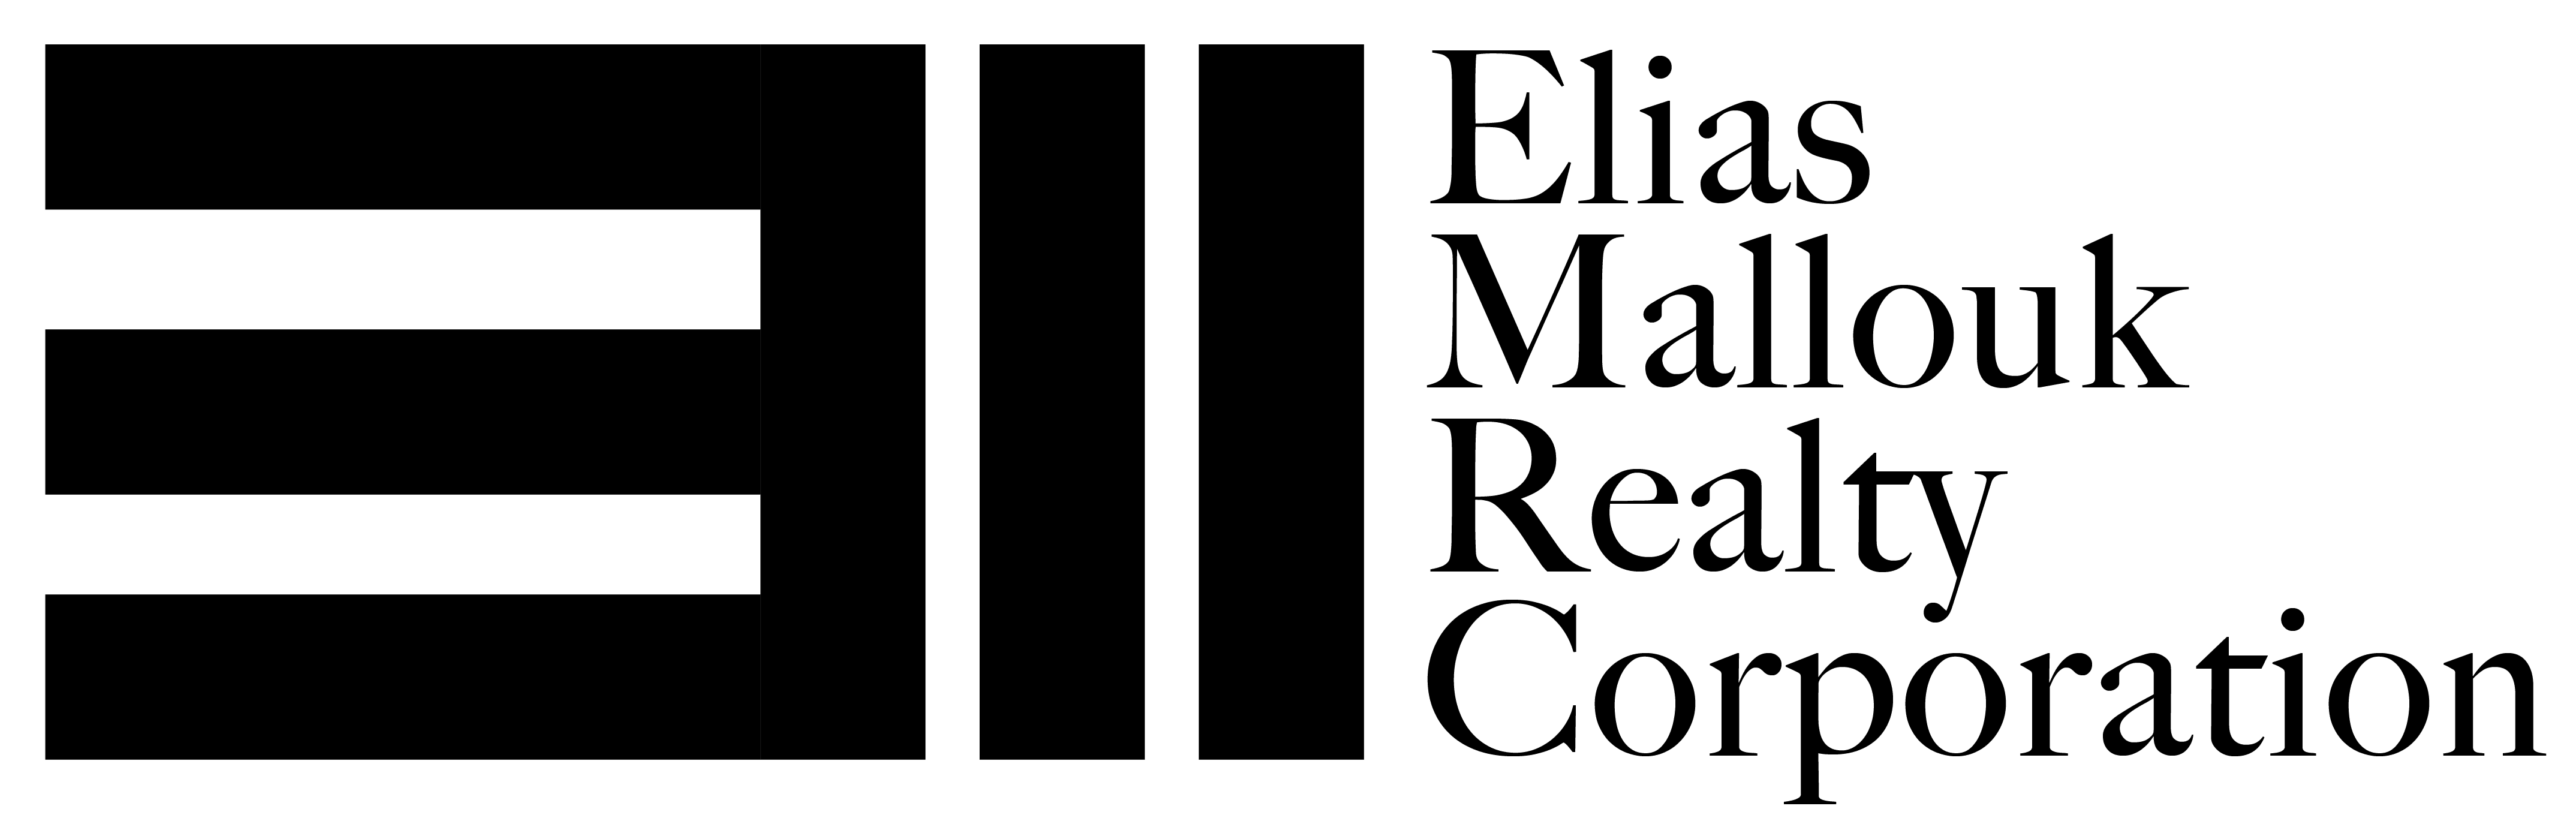 Corporate logo for Elias Mallouk Realty Corporation